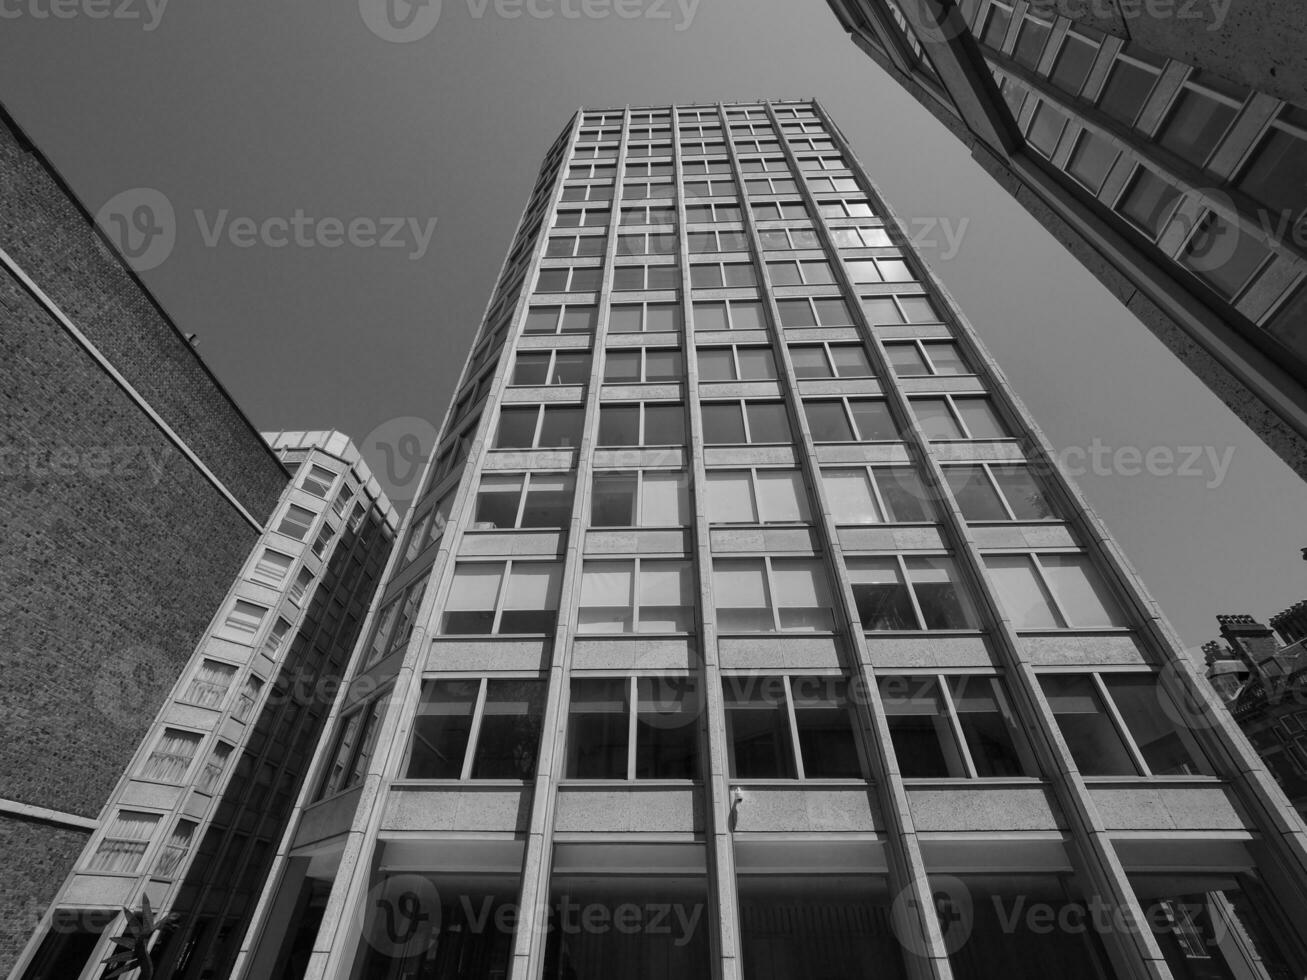 Ökonom Gebäude im bw im London foto